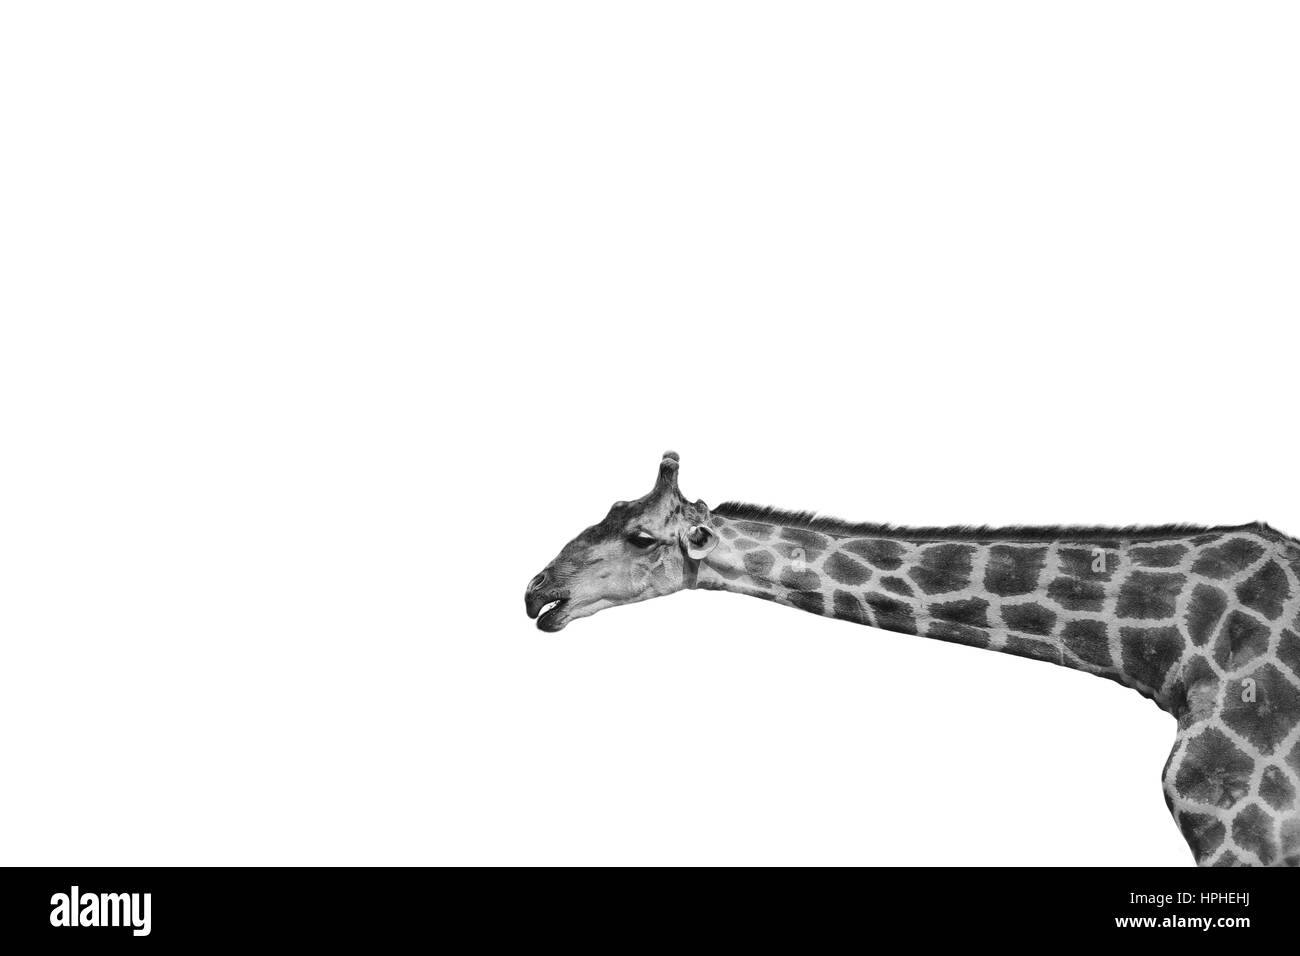 Giraffe portrait on white background in black and white Stock Photo